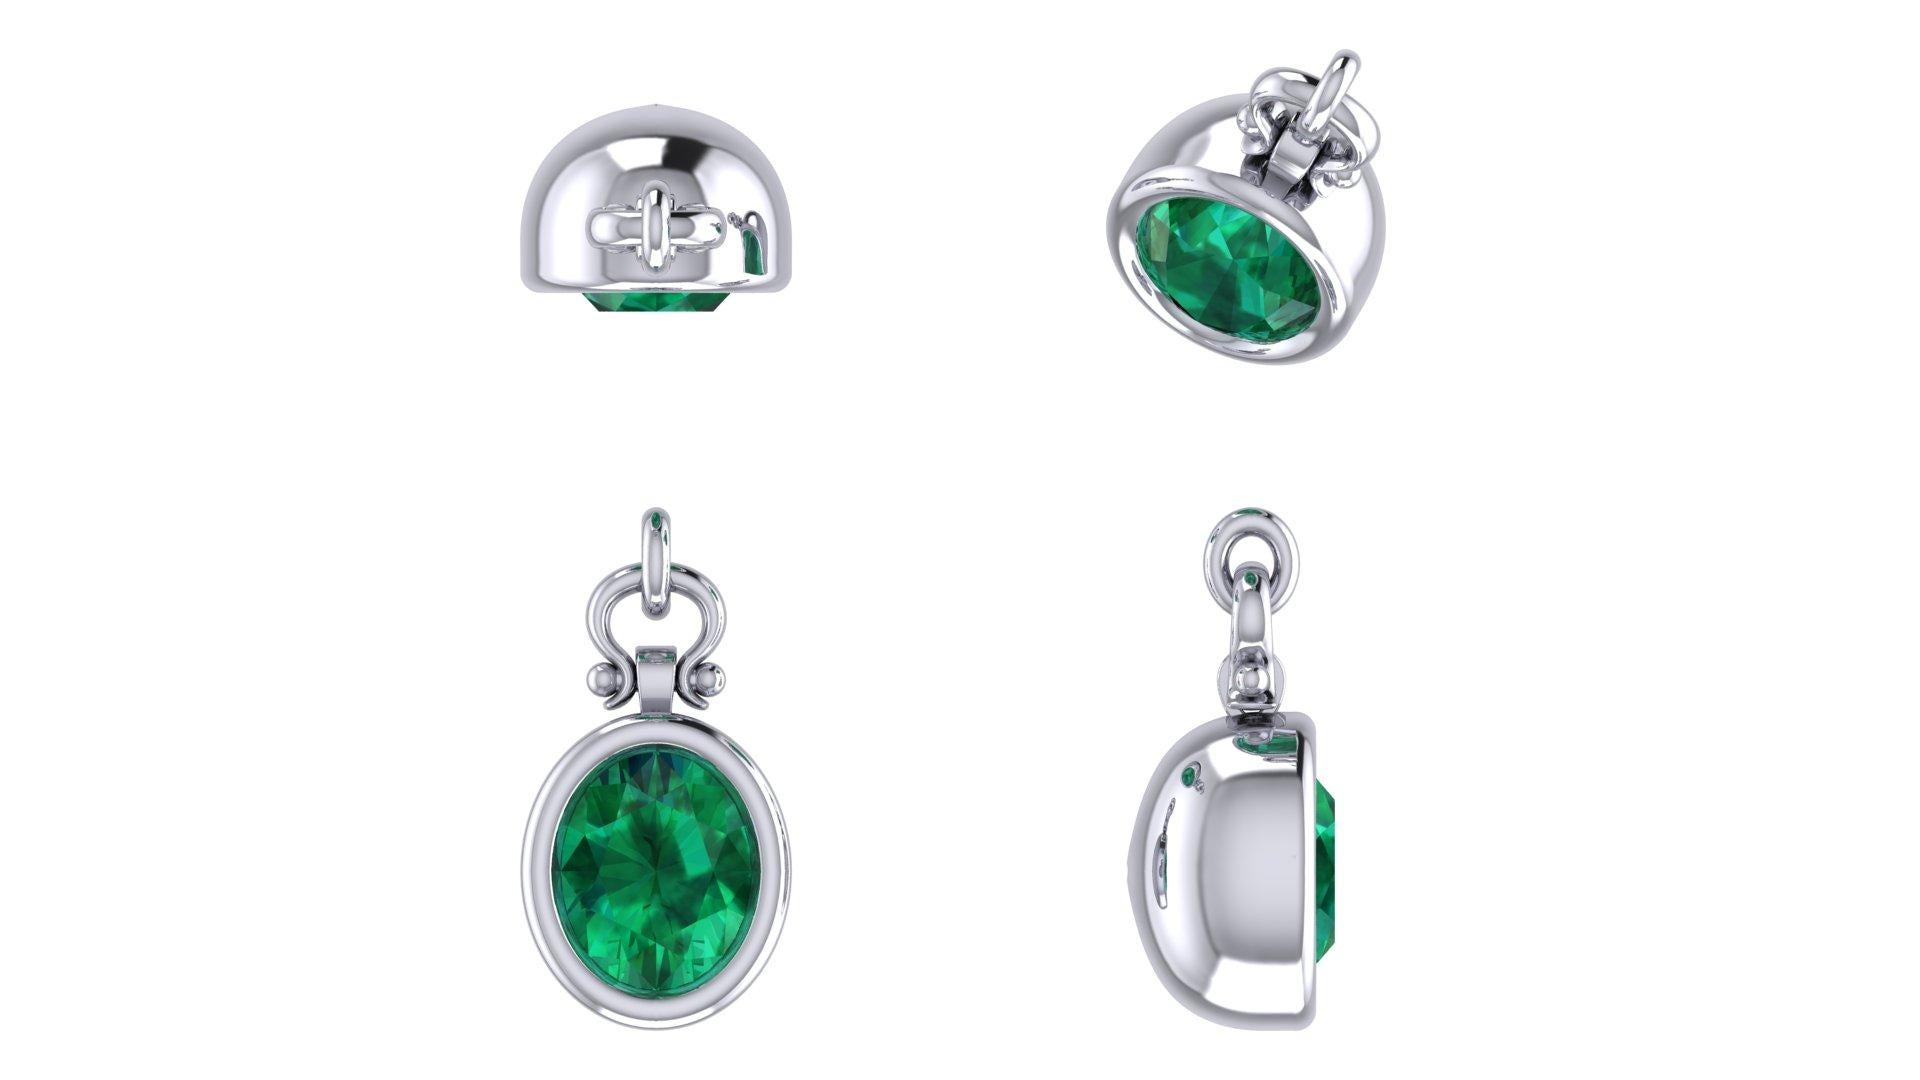 IGITL Certified 2.4 Carat Oval Cut Emerald Pendant Necklace in 18k For Sale 2